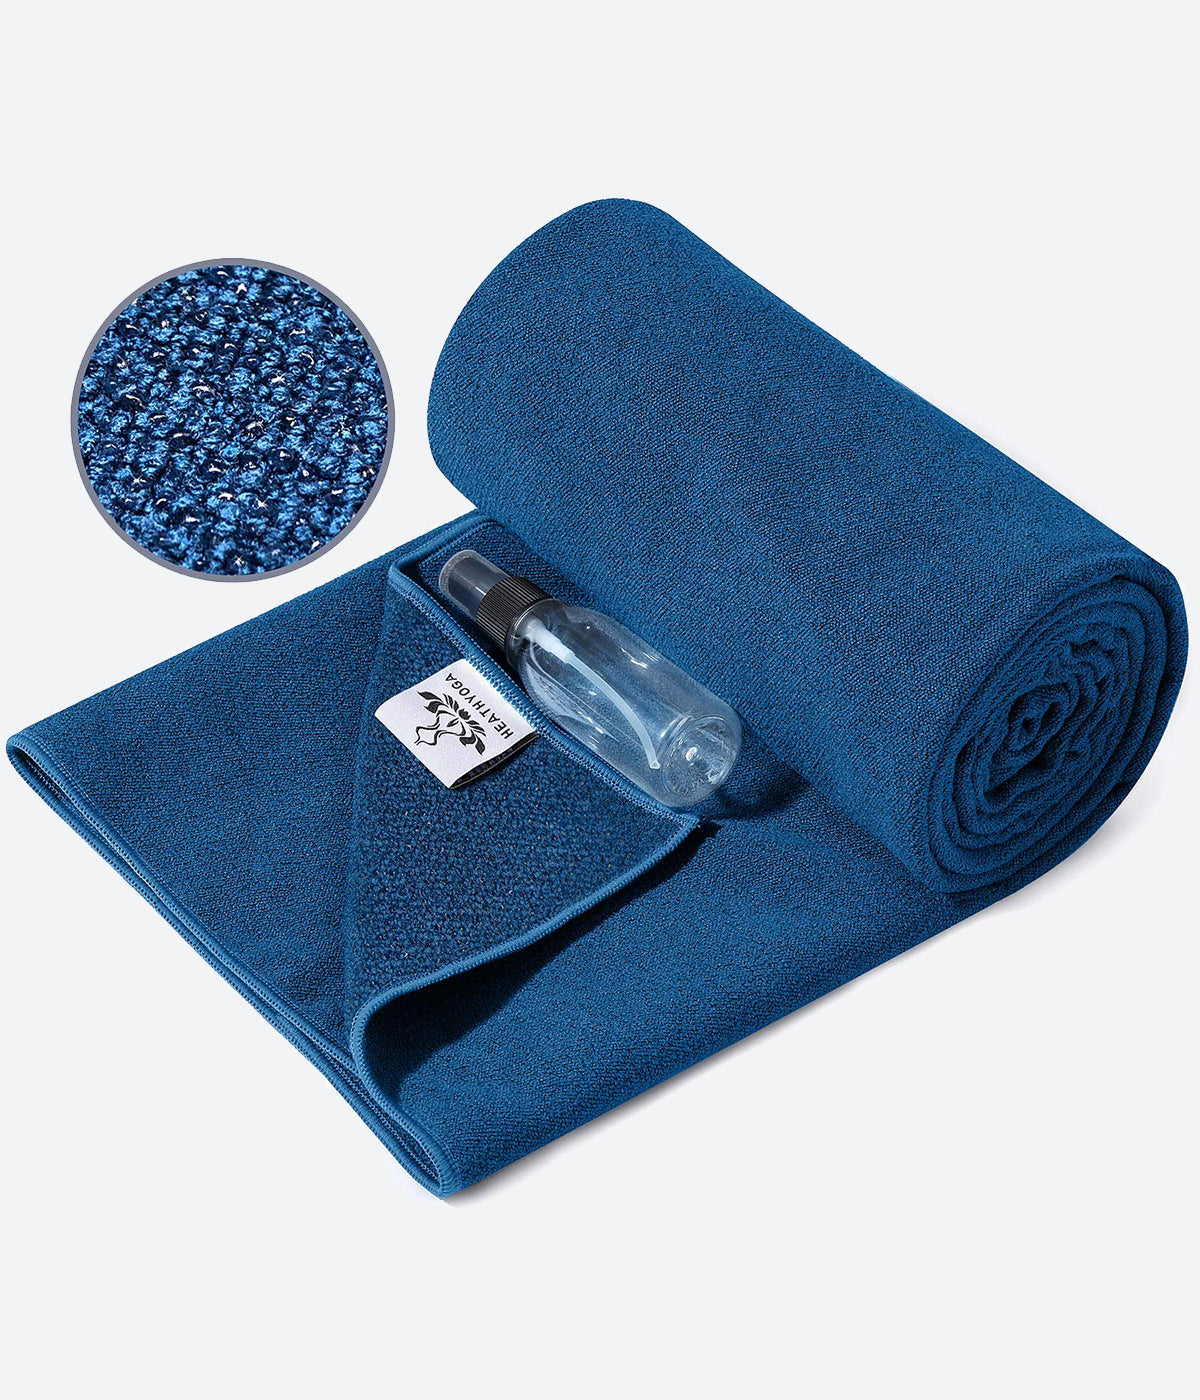 Stickyfiber Hot Yoga Towel Mat Towel